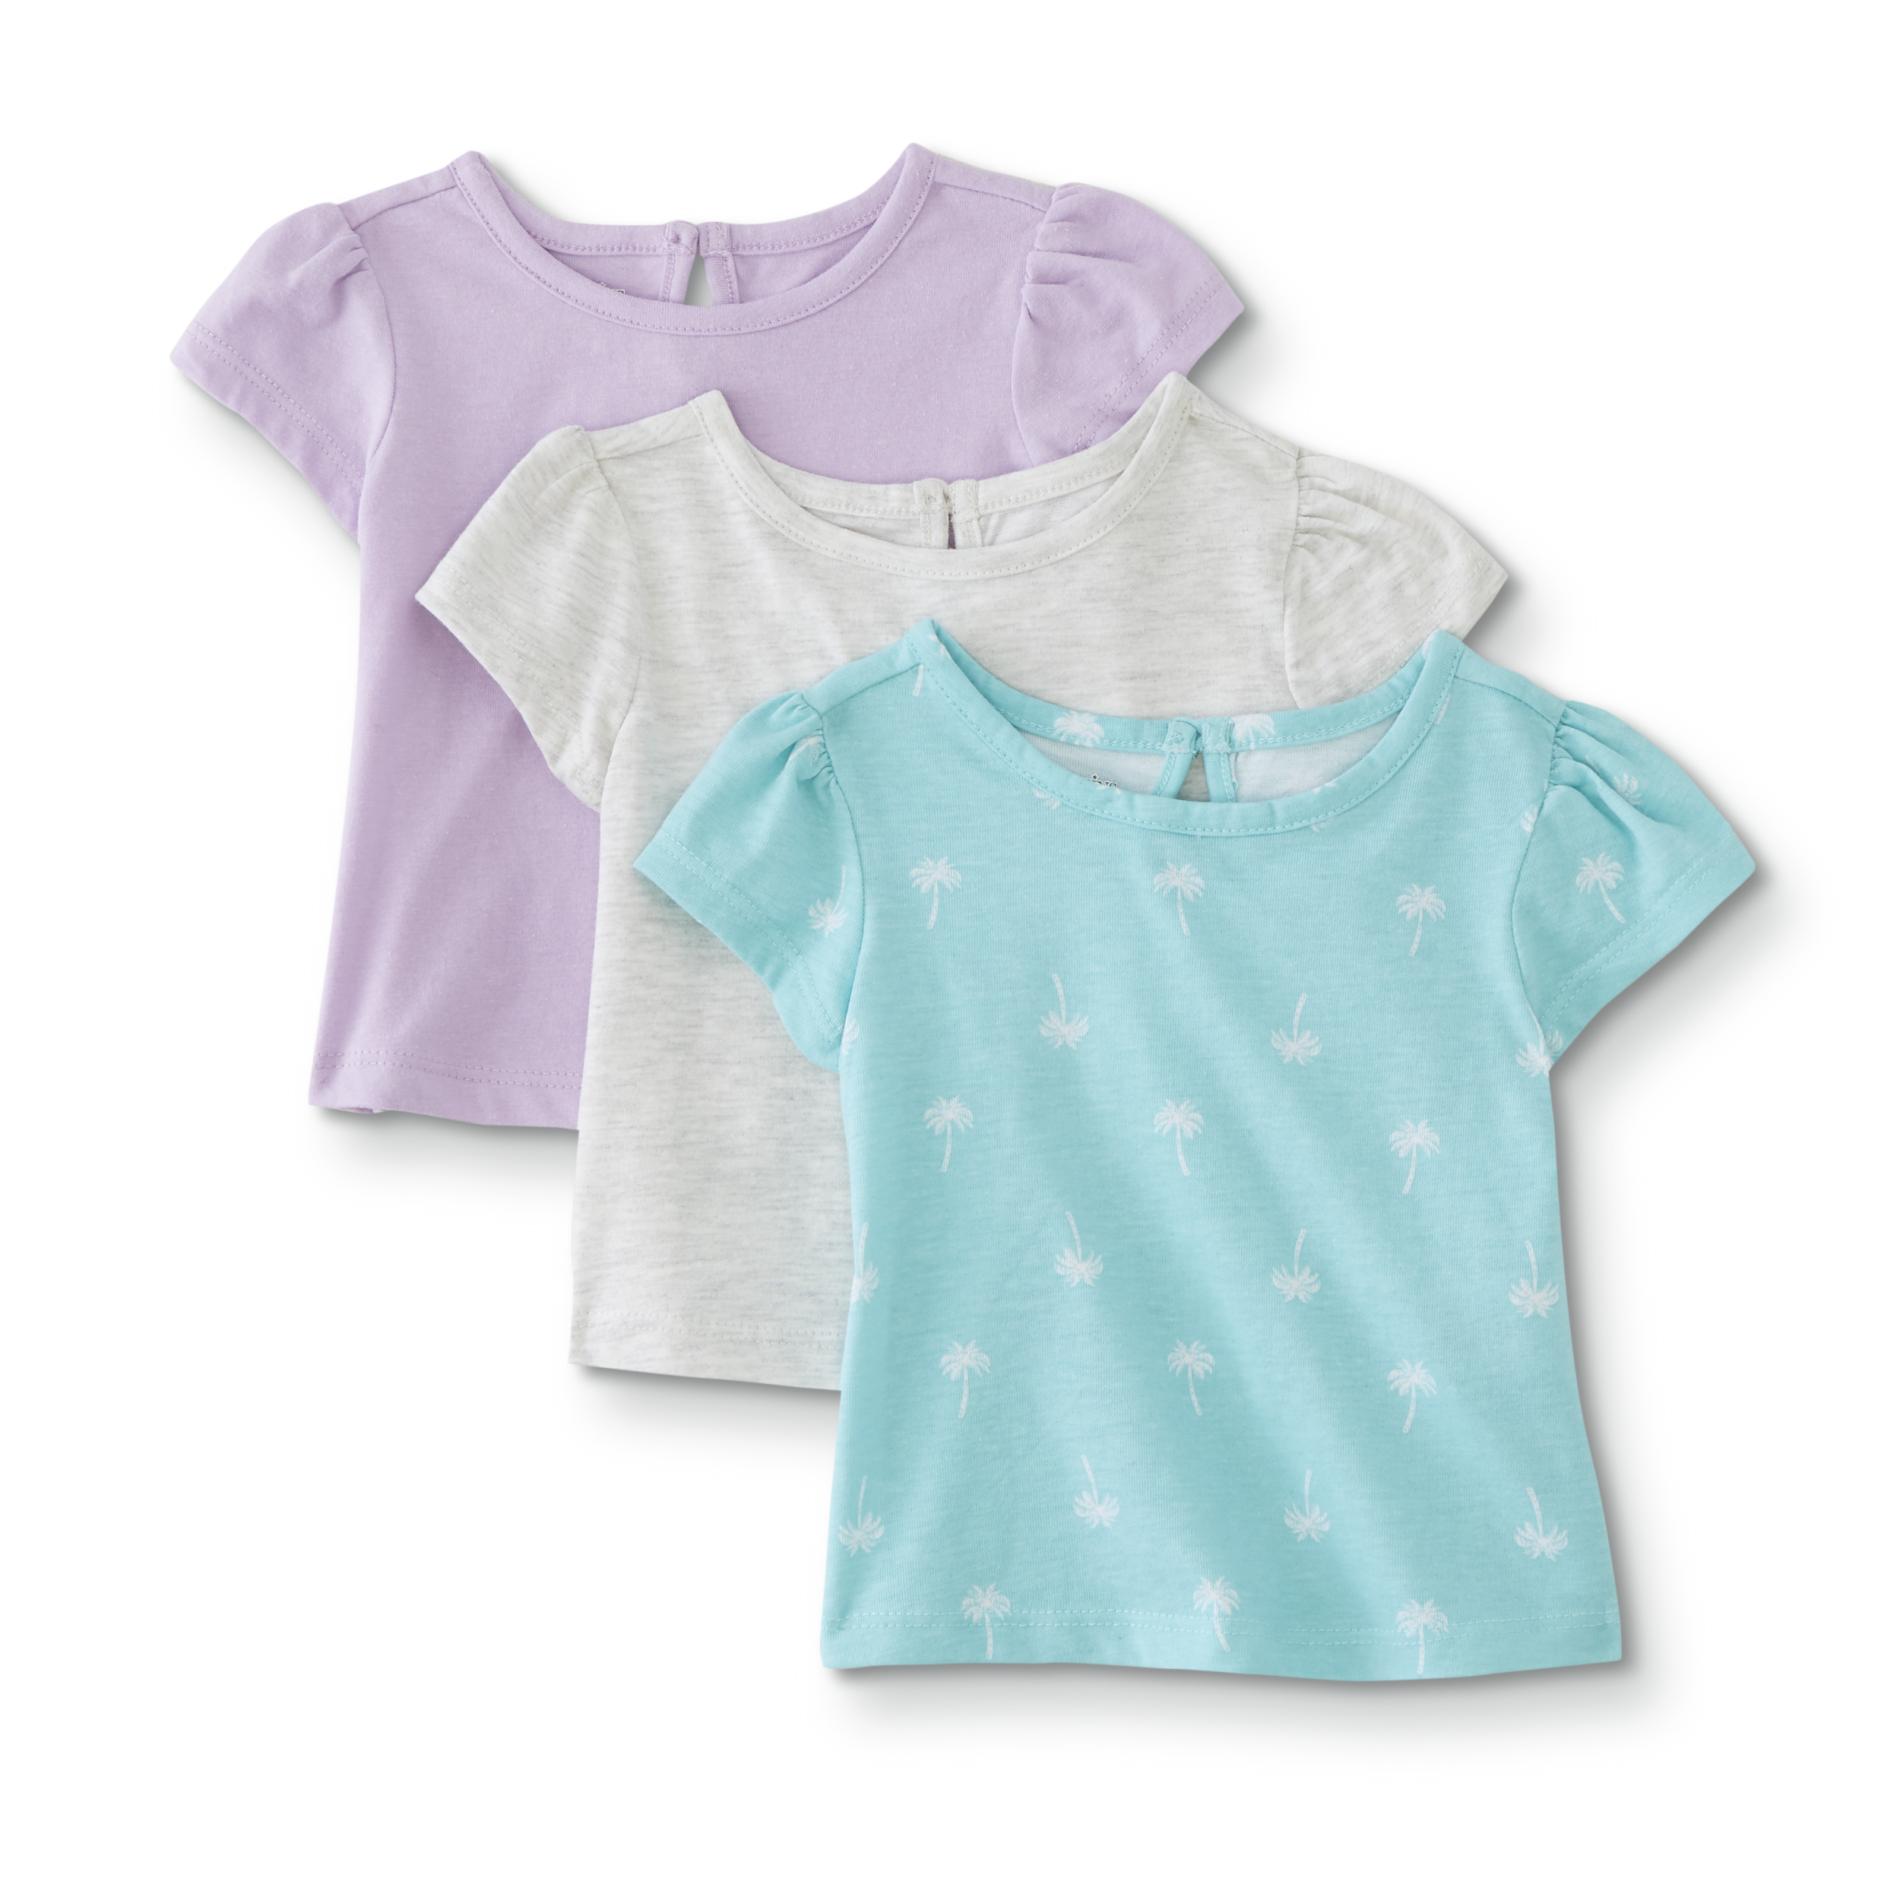 Toughskins Infant & Toddler Girls' 3-Pack T-Shirt - Palm Tree